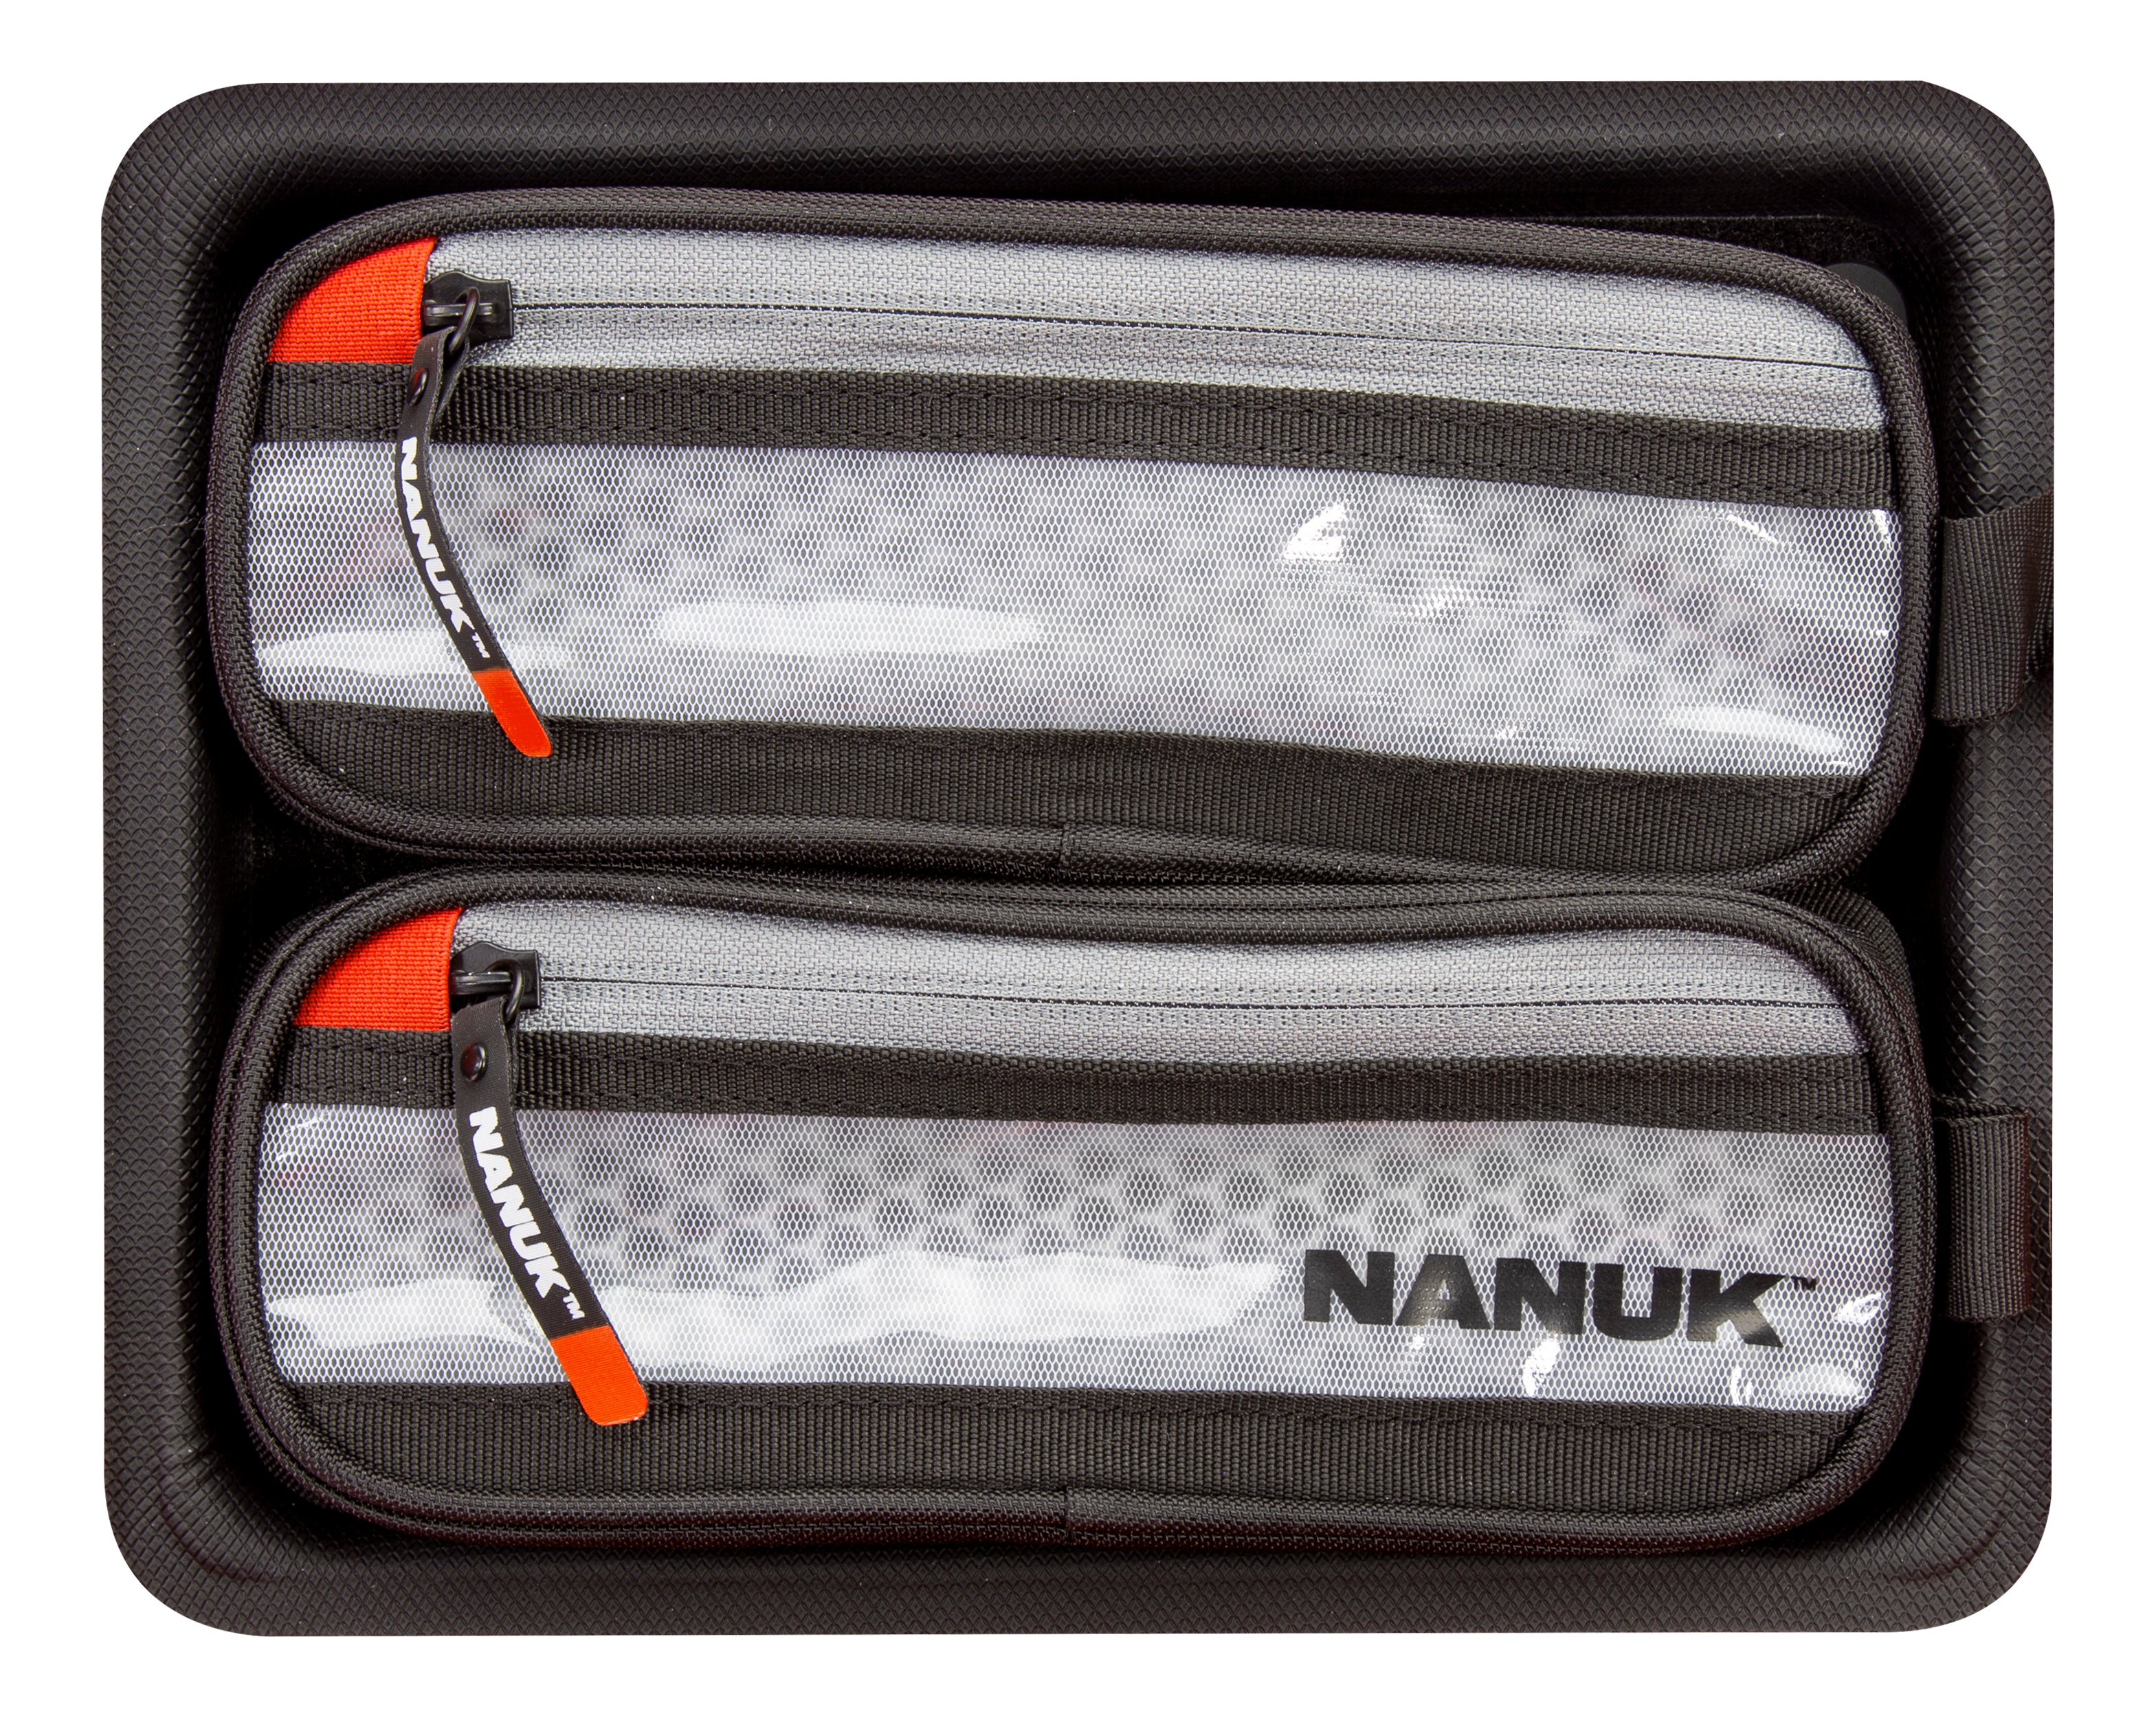 NANUK Lid Organizers - The Optimal Hard Case Storage Solution